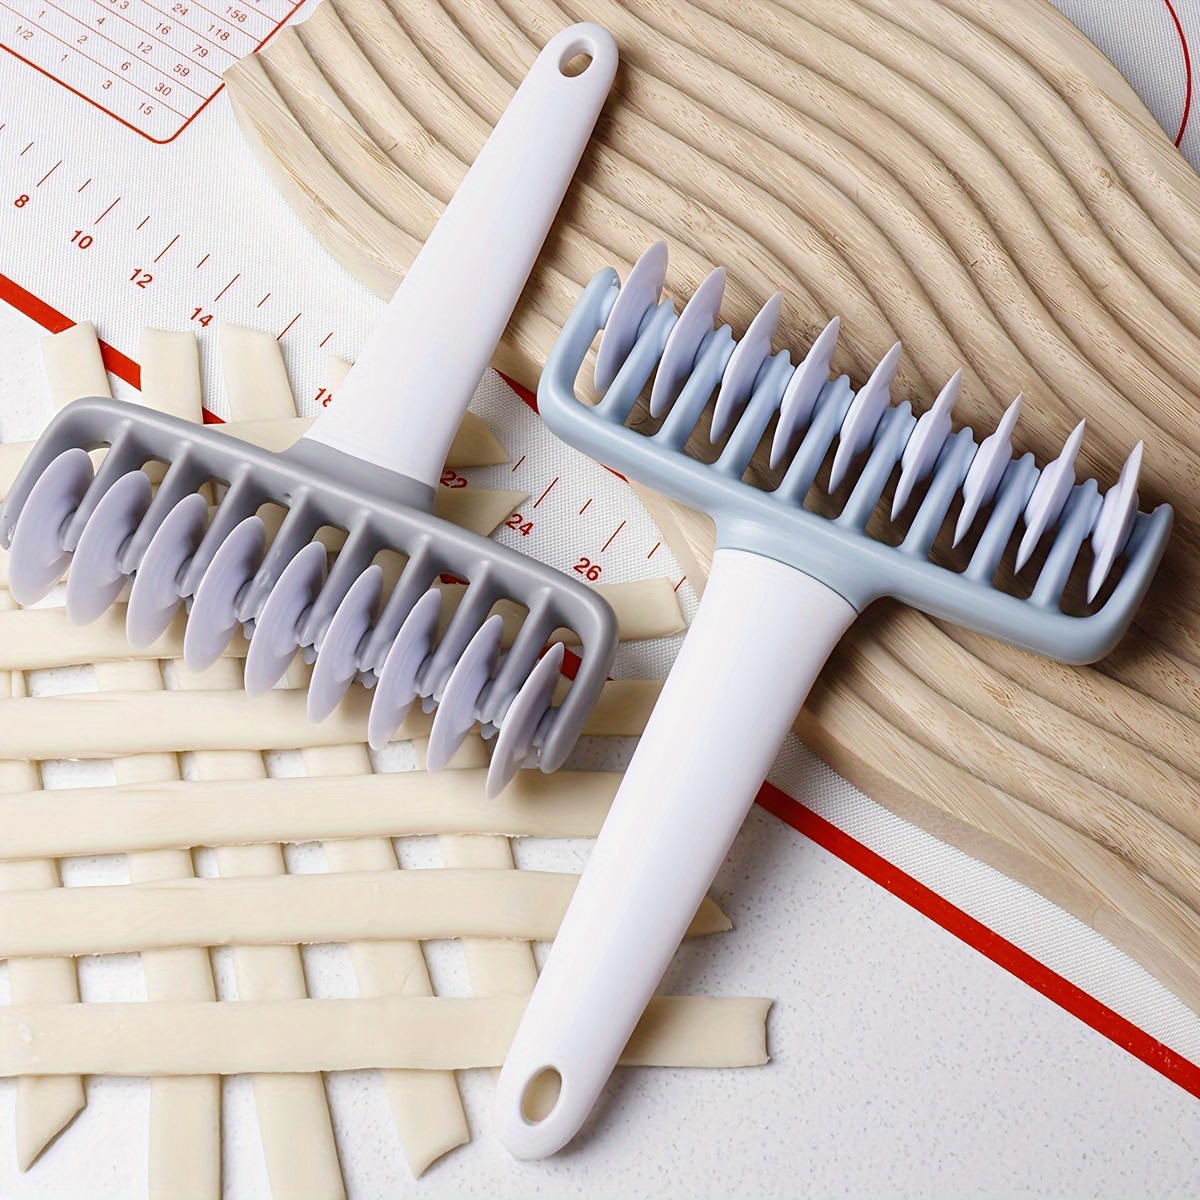 Plastic Kitchen Accessories, Plastic Pasta Tools Cutter